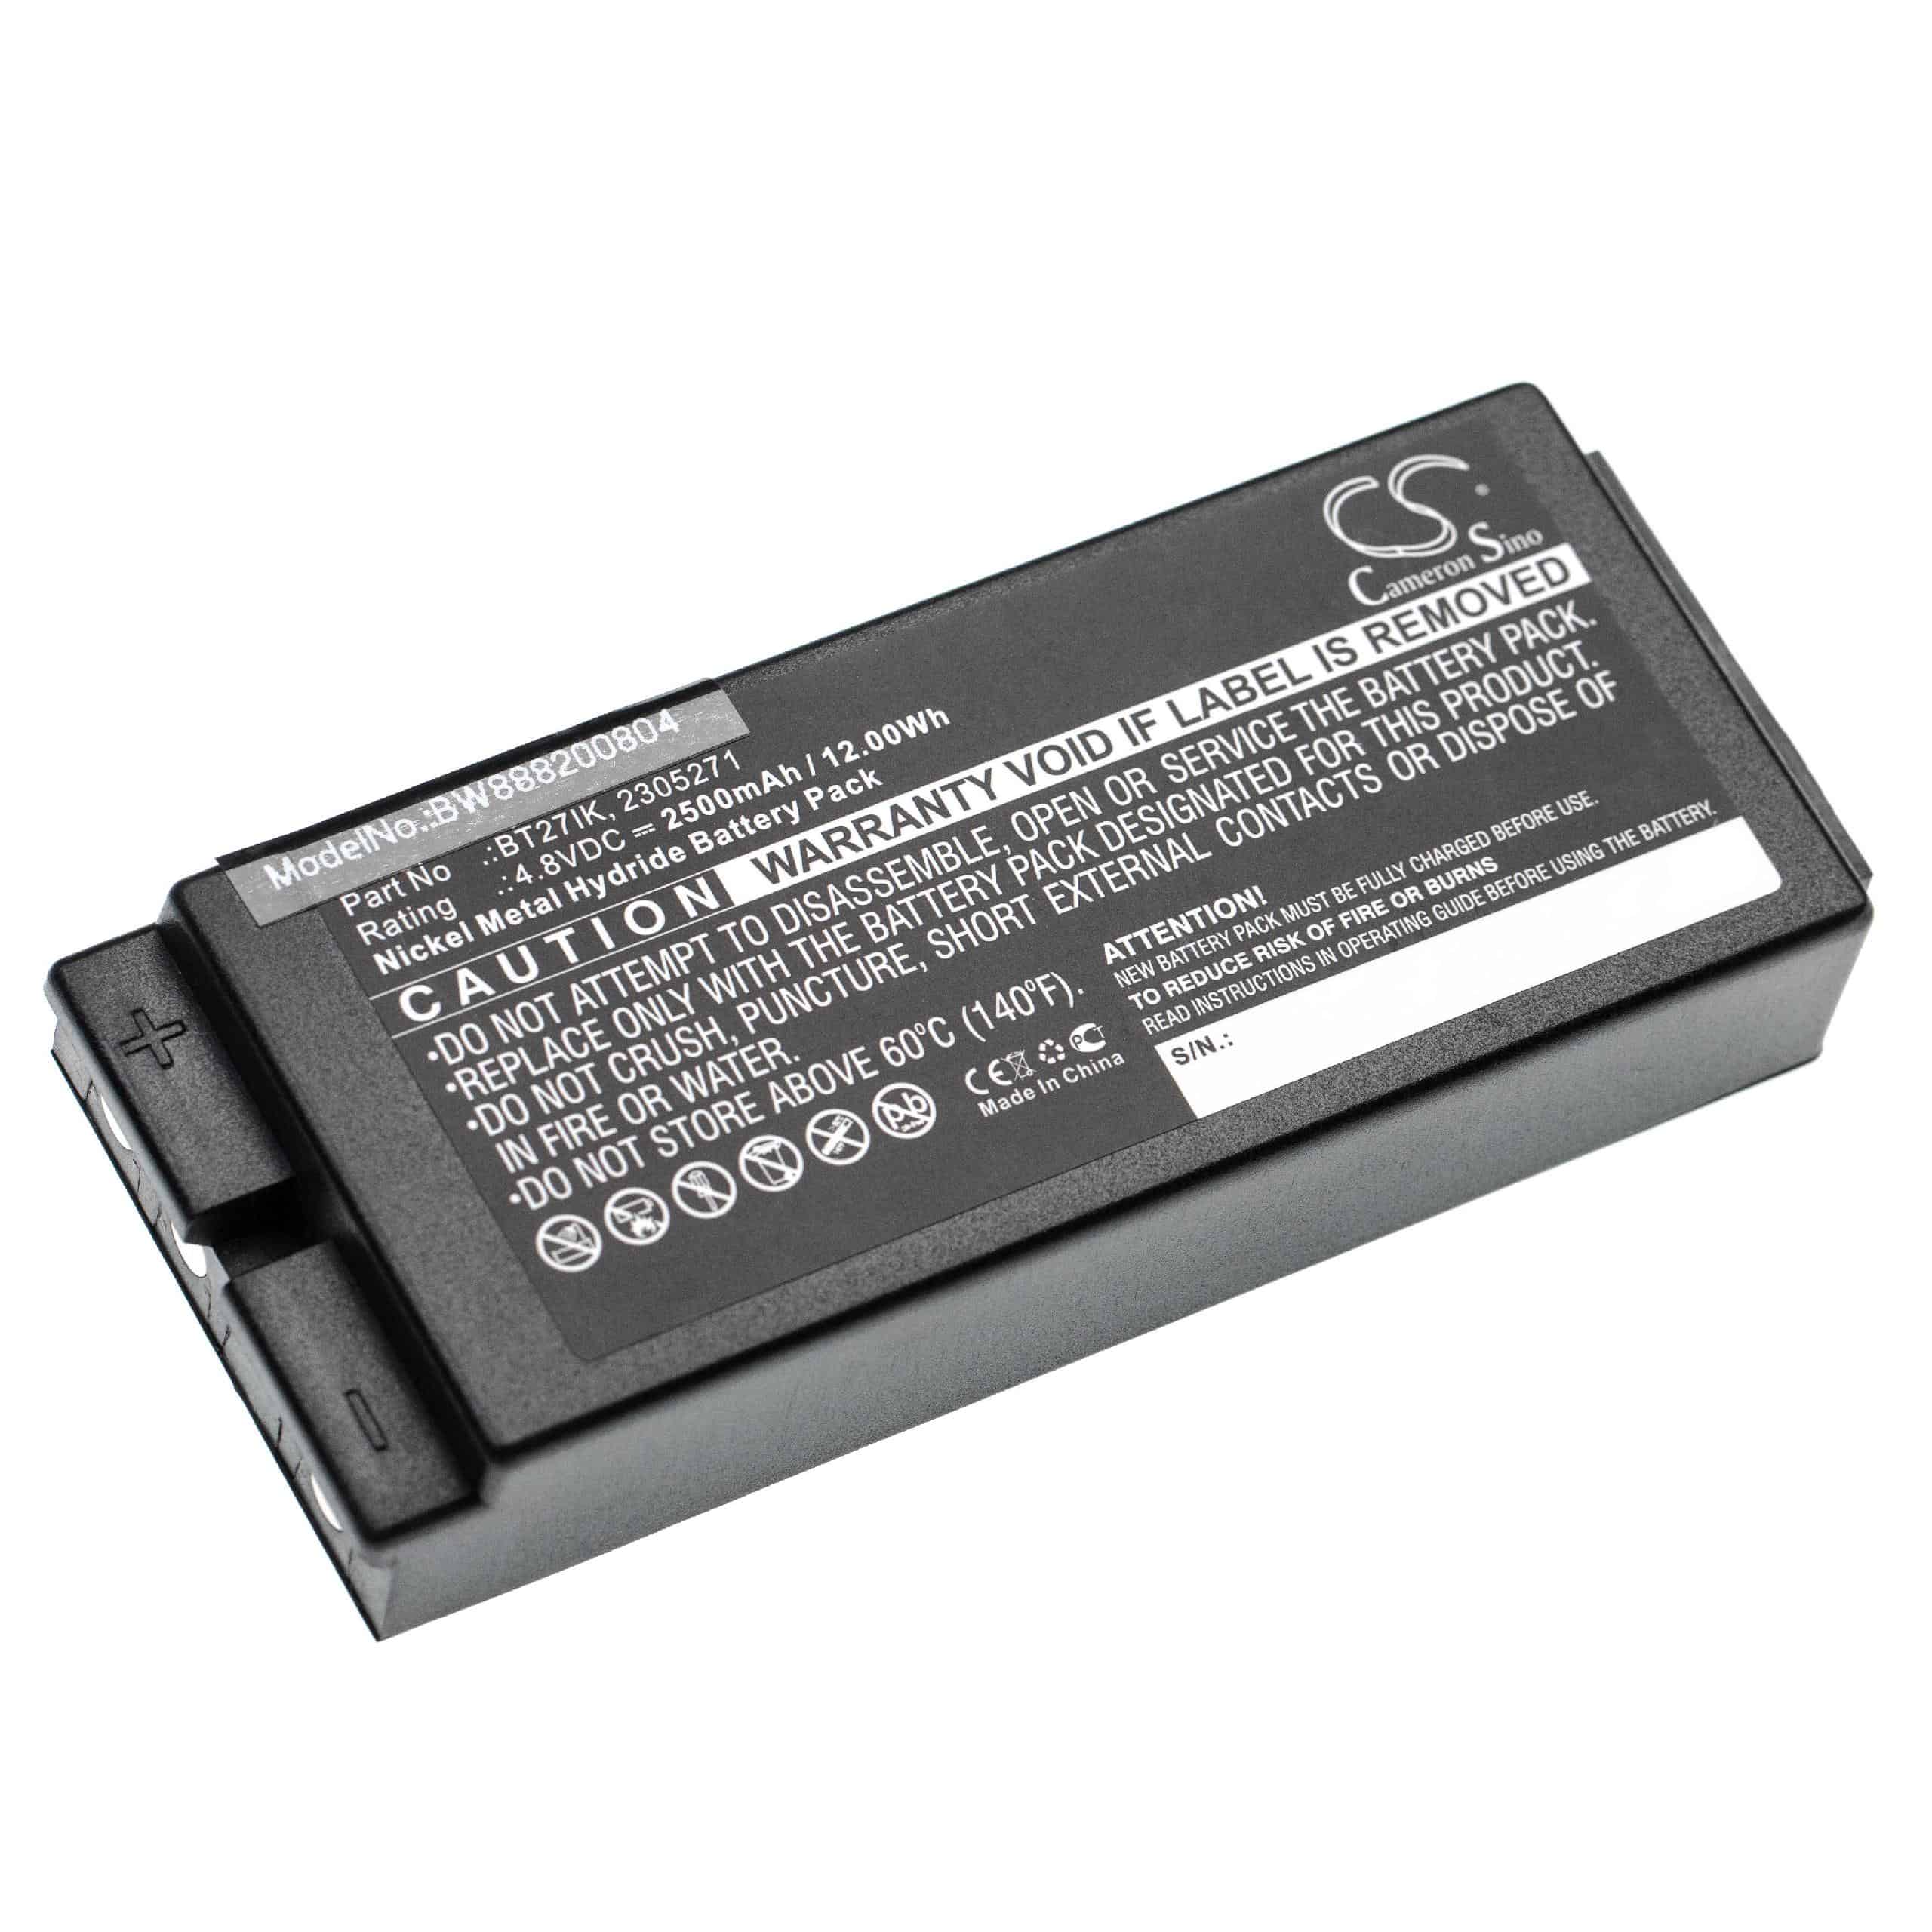 Batería reemplaza Danfoss 2305271, BT24IK para mando distancia industrial Ikusi - 2500 mAh 4,8 V NiMH